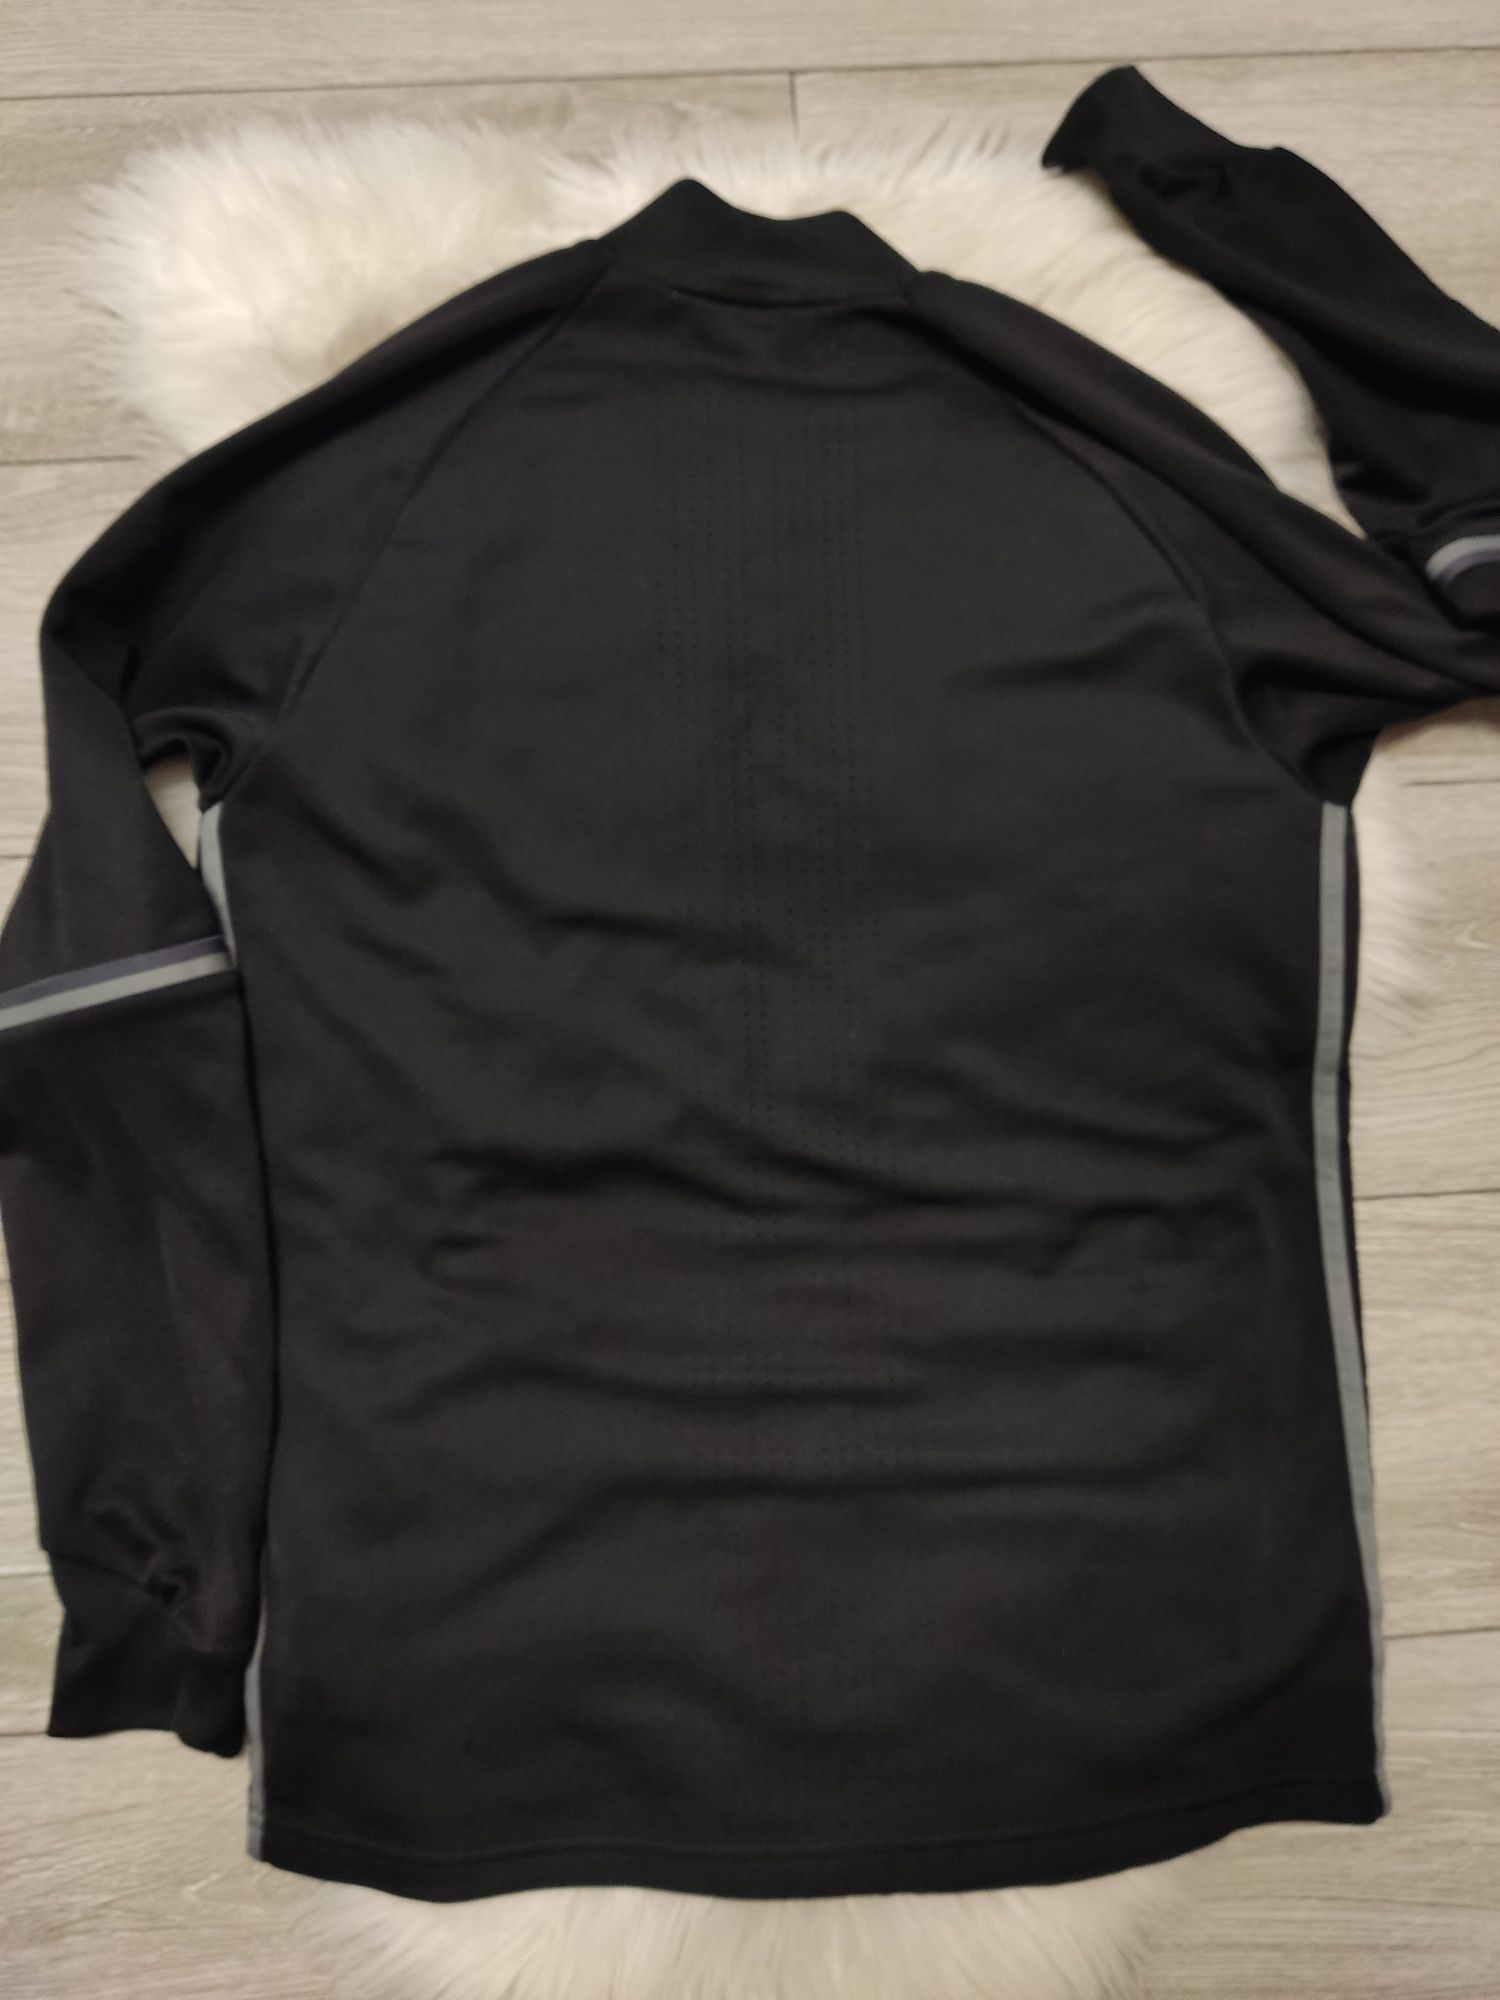 Bluza czarna męska rozpinana Adidas M